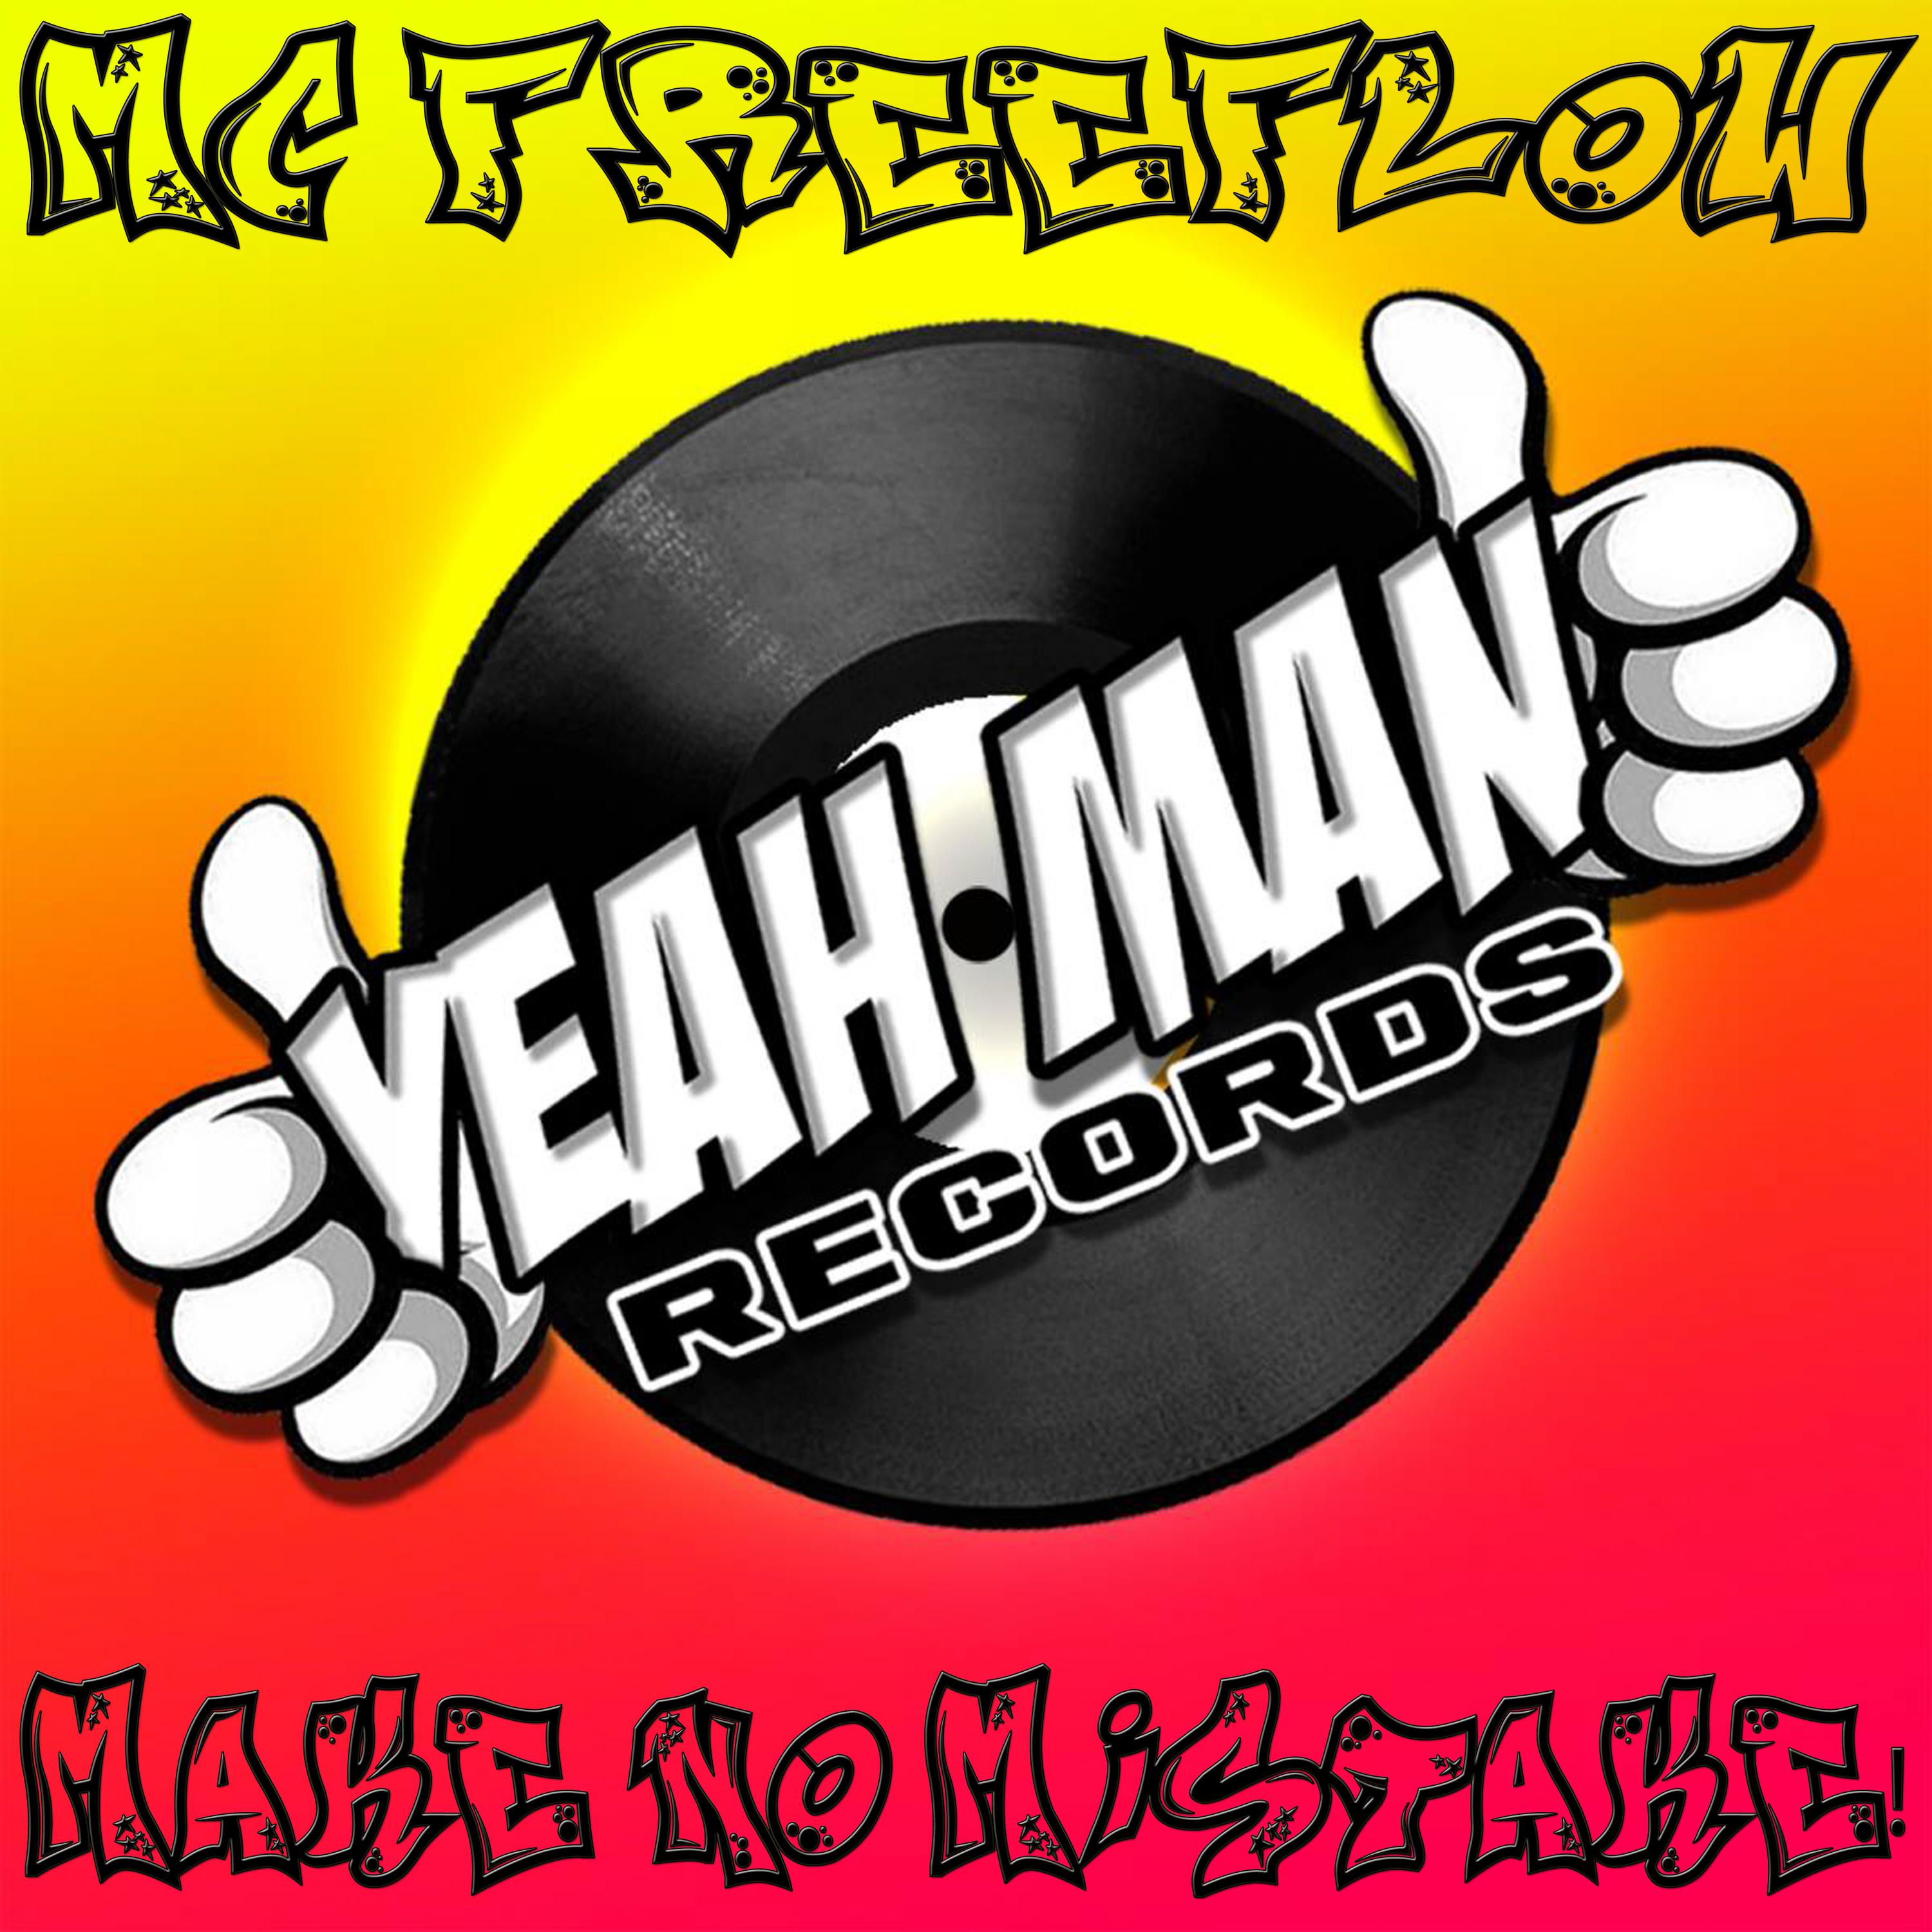 MC Freeflow - Make No Mistake! (Original Mix)